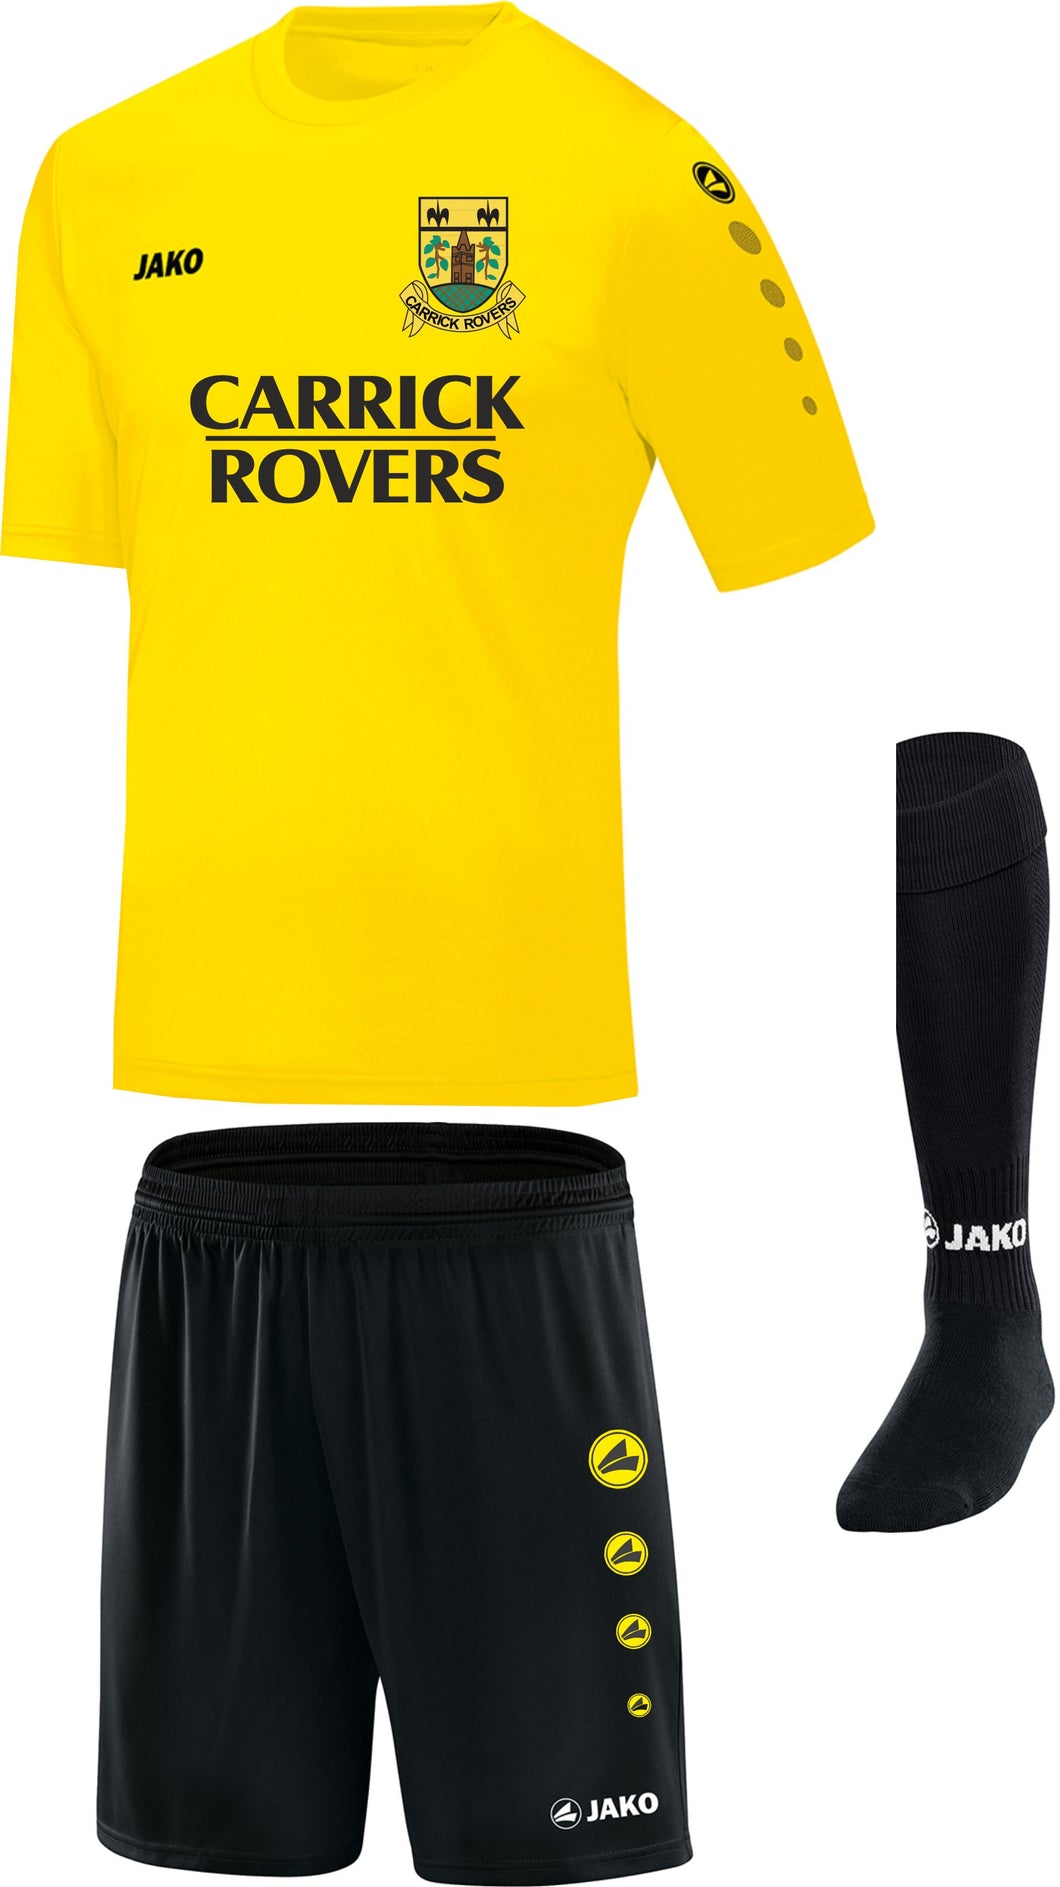 Kids JAKO Carrick Rovers Player Pack 1111CR-K